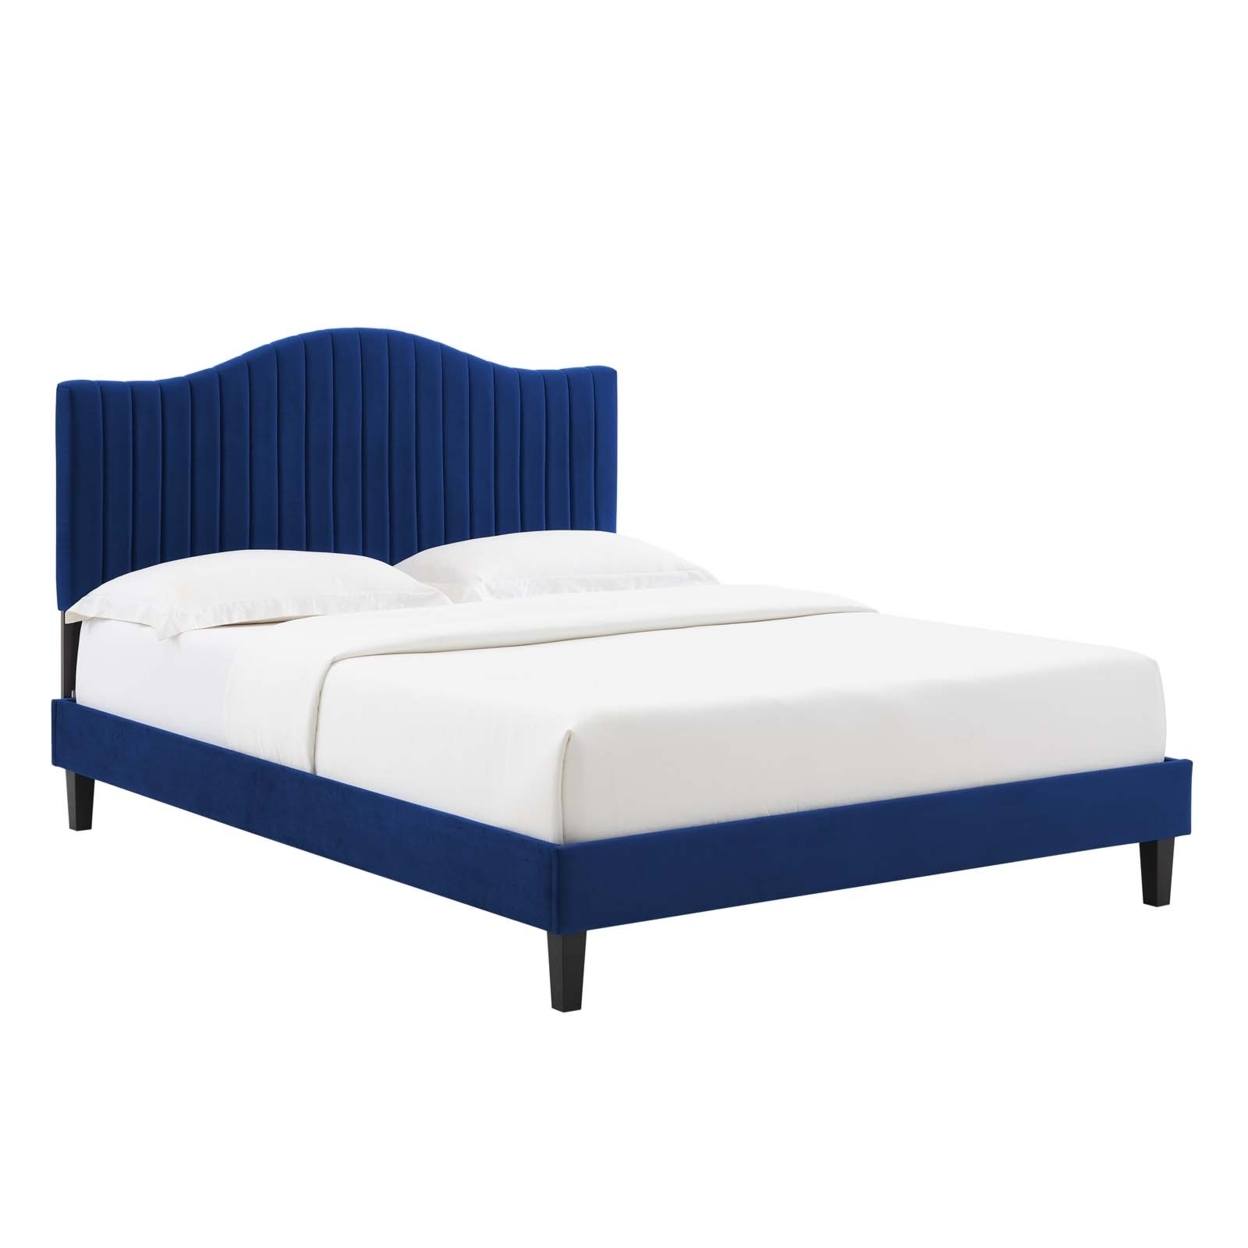 King Size Platform Bed, Navy Blue Velvet, Camelback Design Headboard